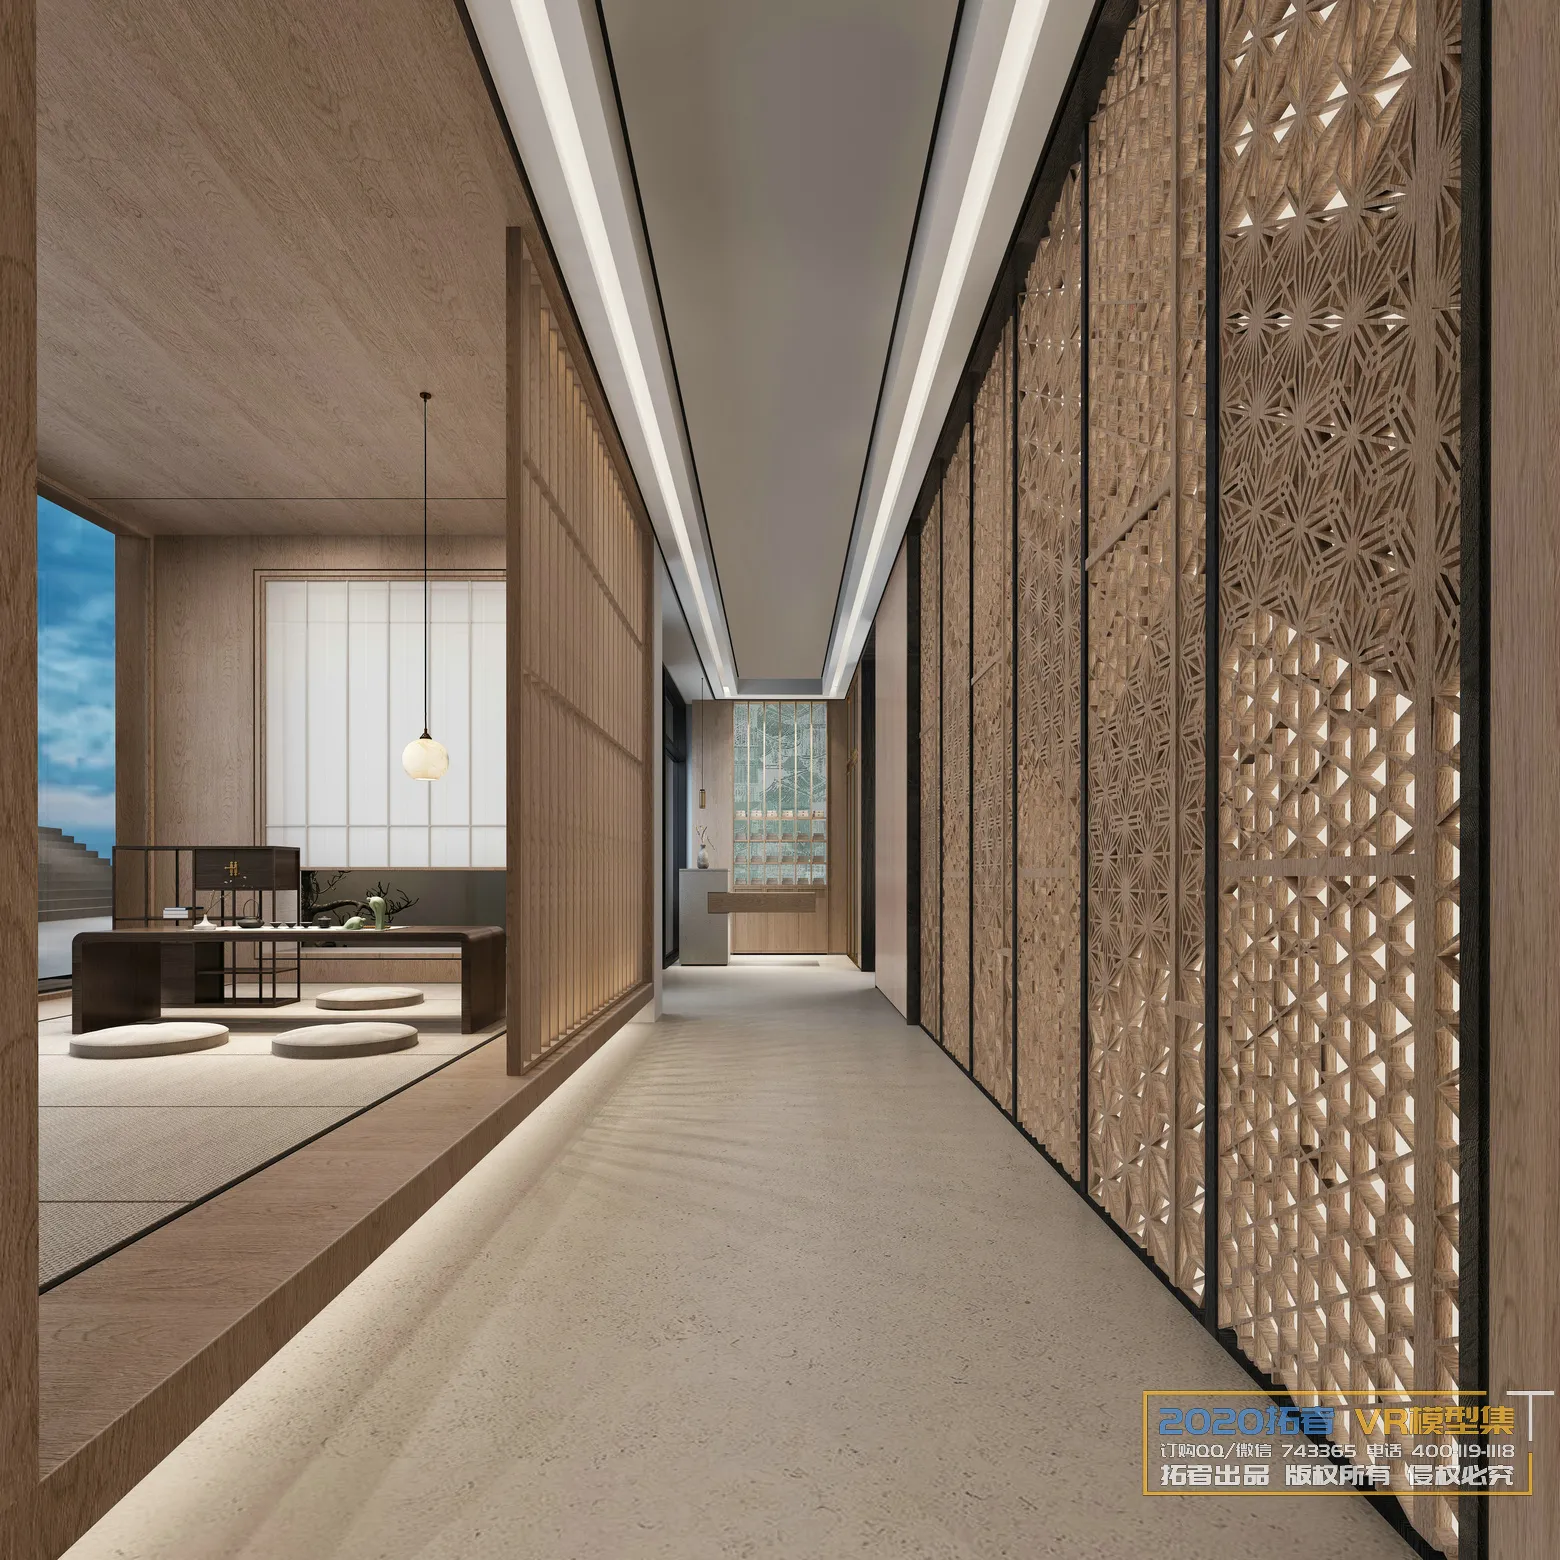 Extension Interior 20 – 12 – ELEVATOR & CORRIDOR – 47